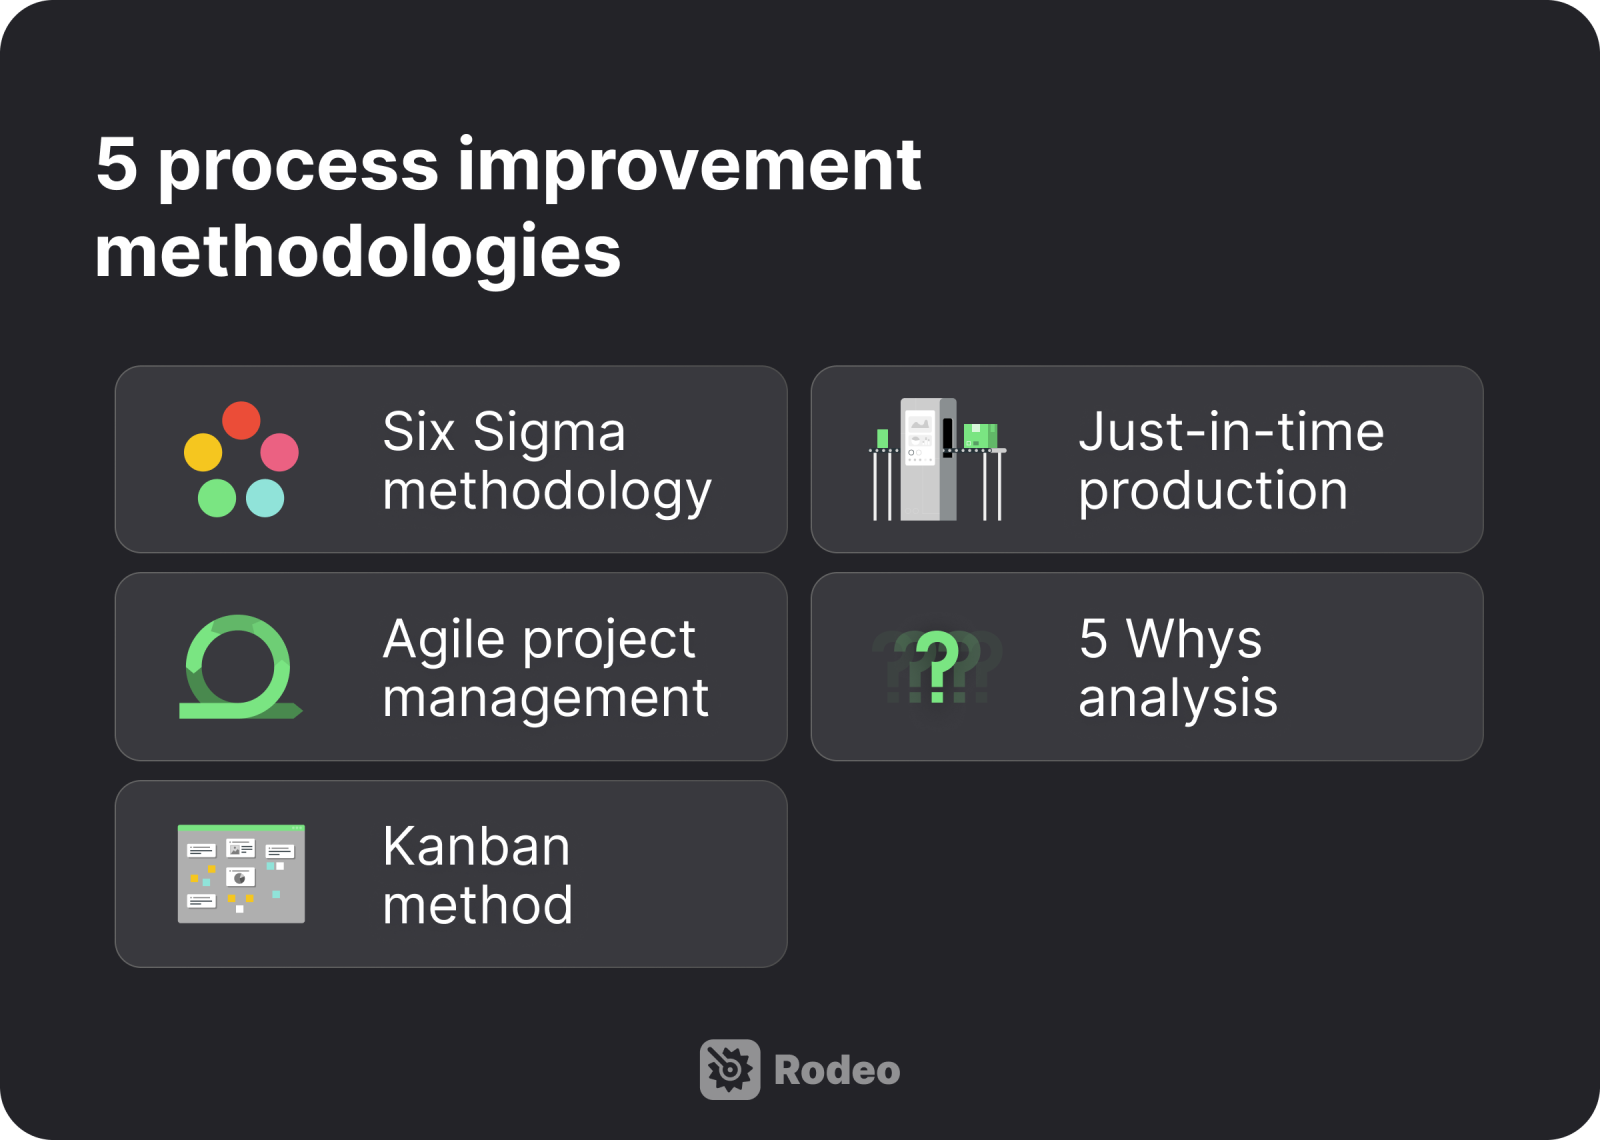 List of the five process improvement methodologies